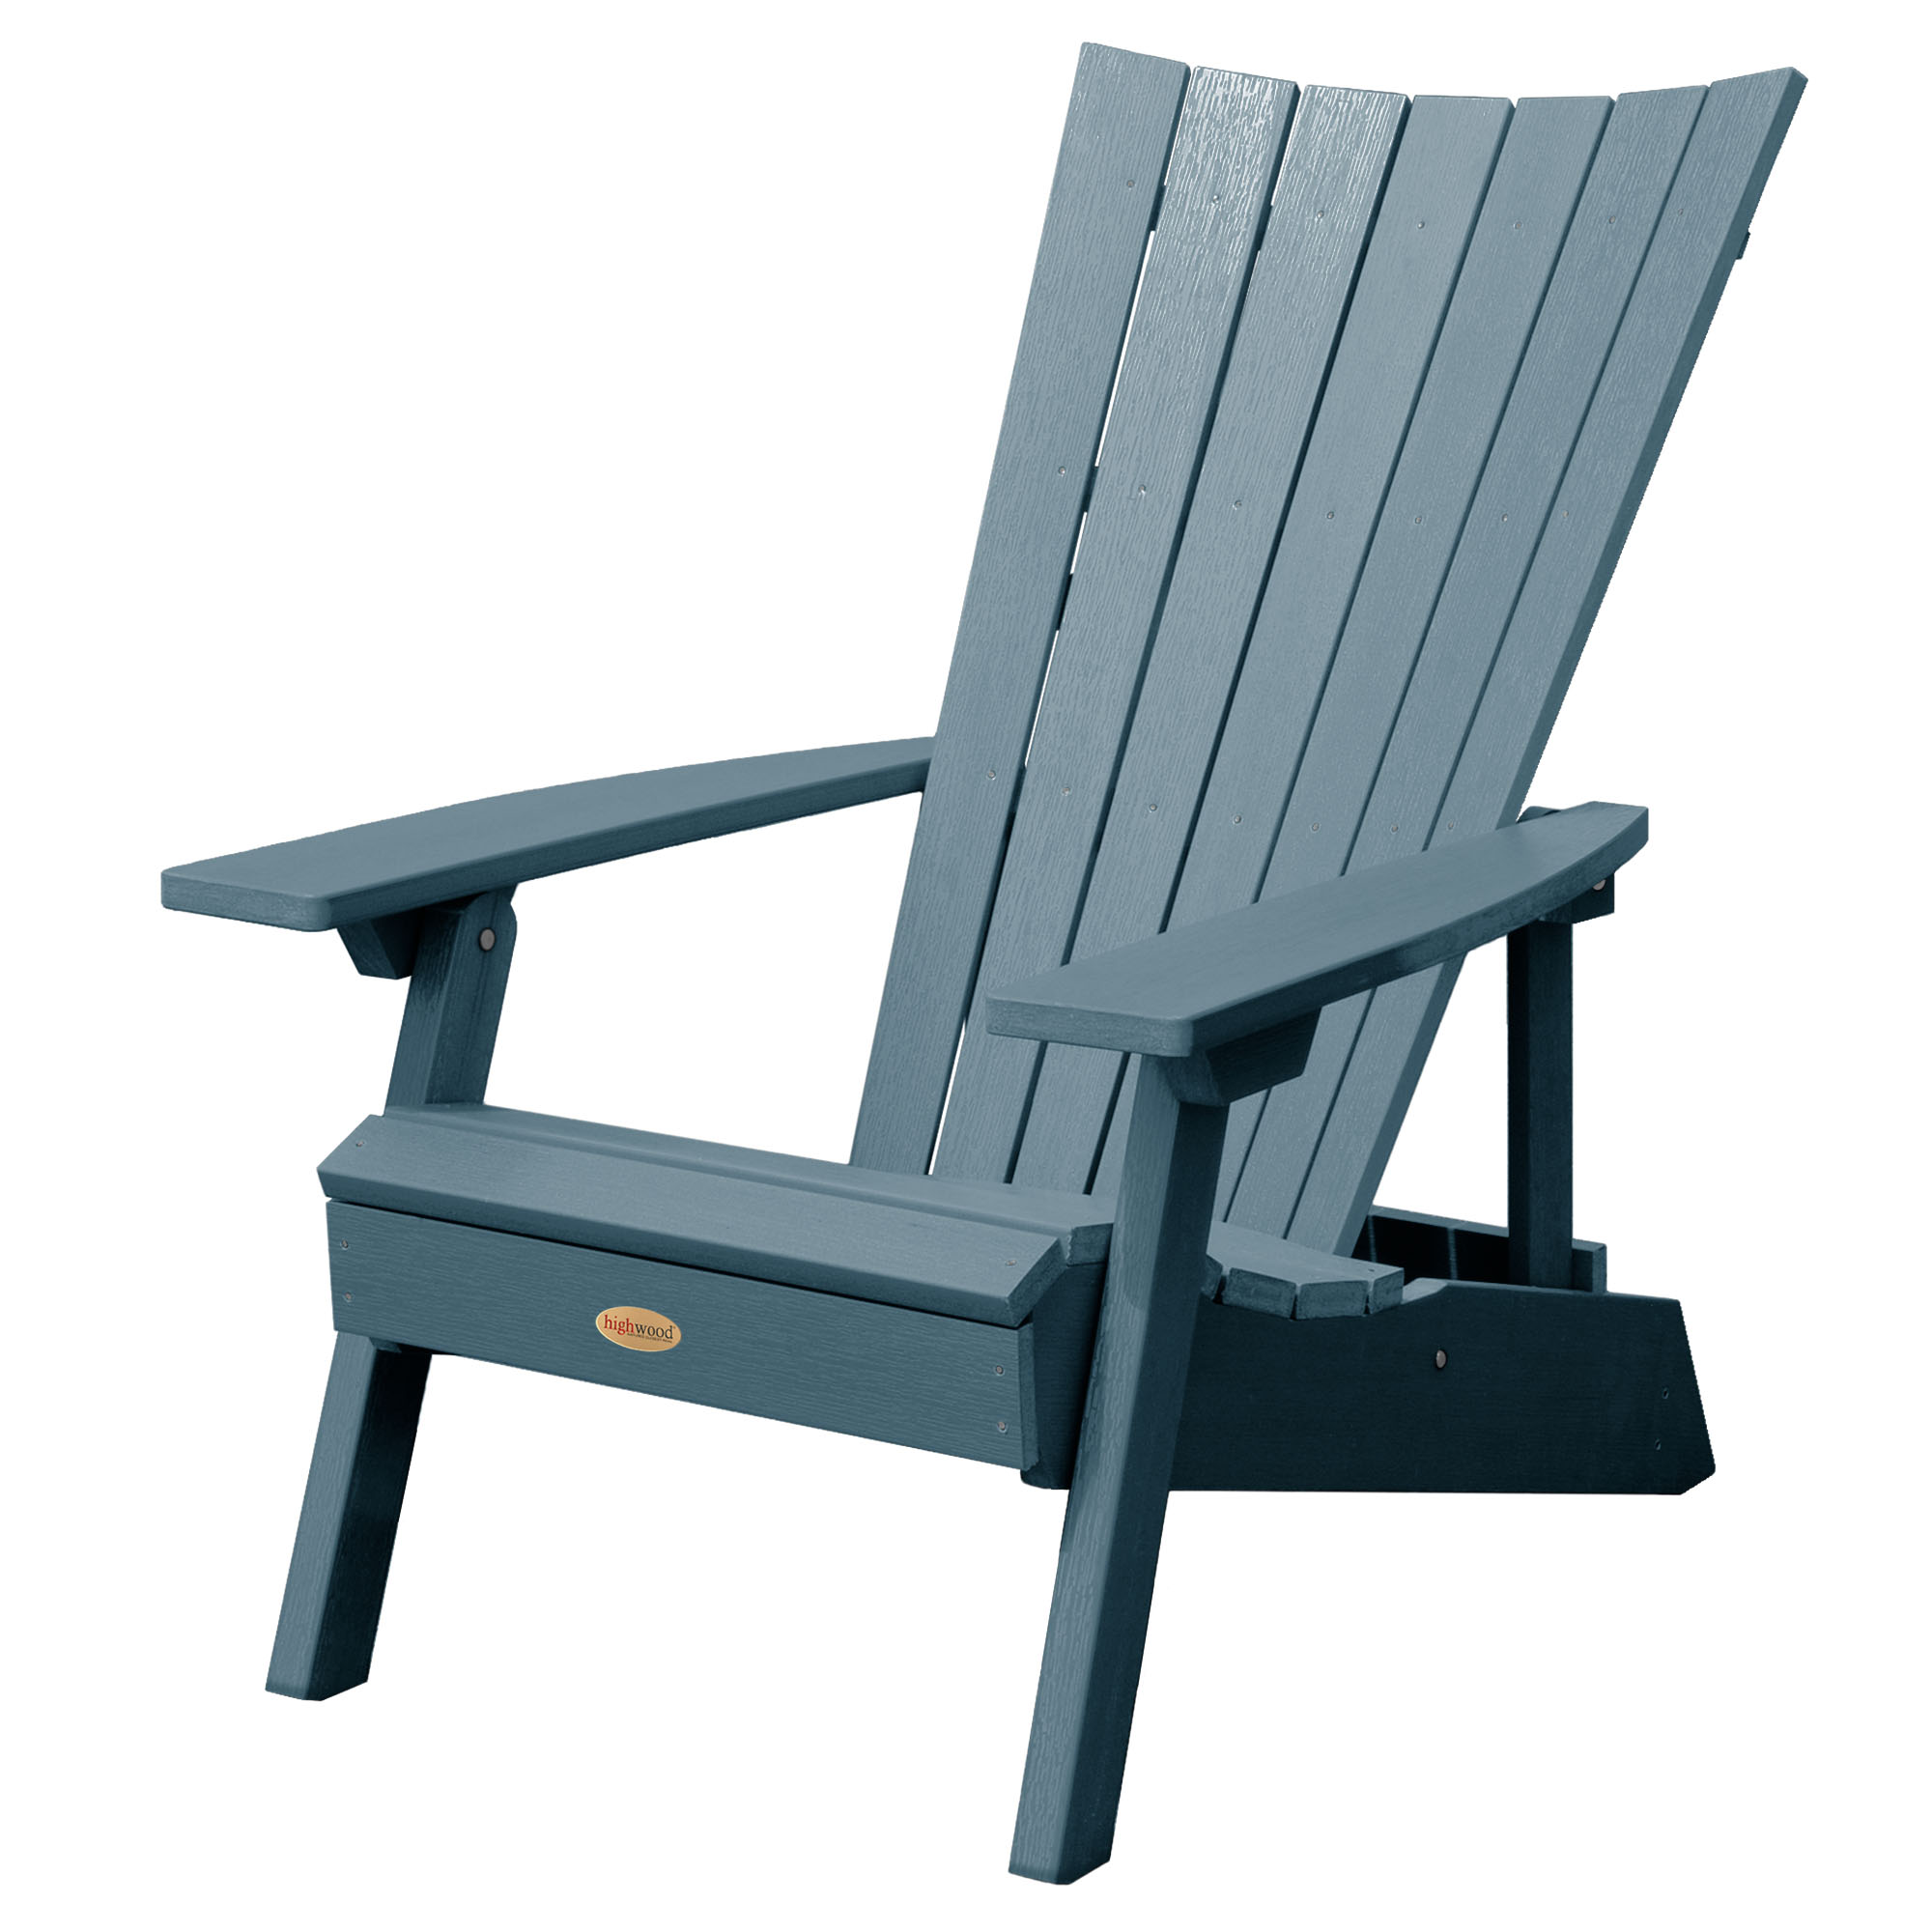 Highwood Manhattan Beach Adirondack Chair with Folding Ottoman - image 3 of 6